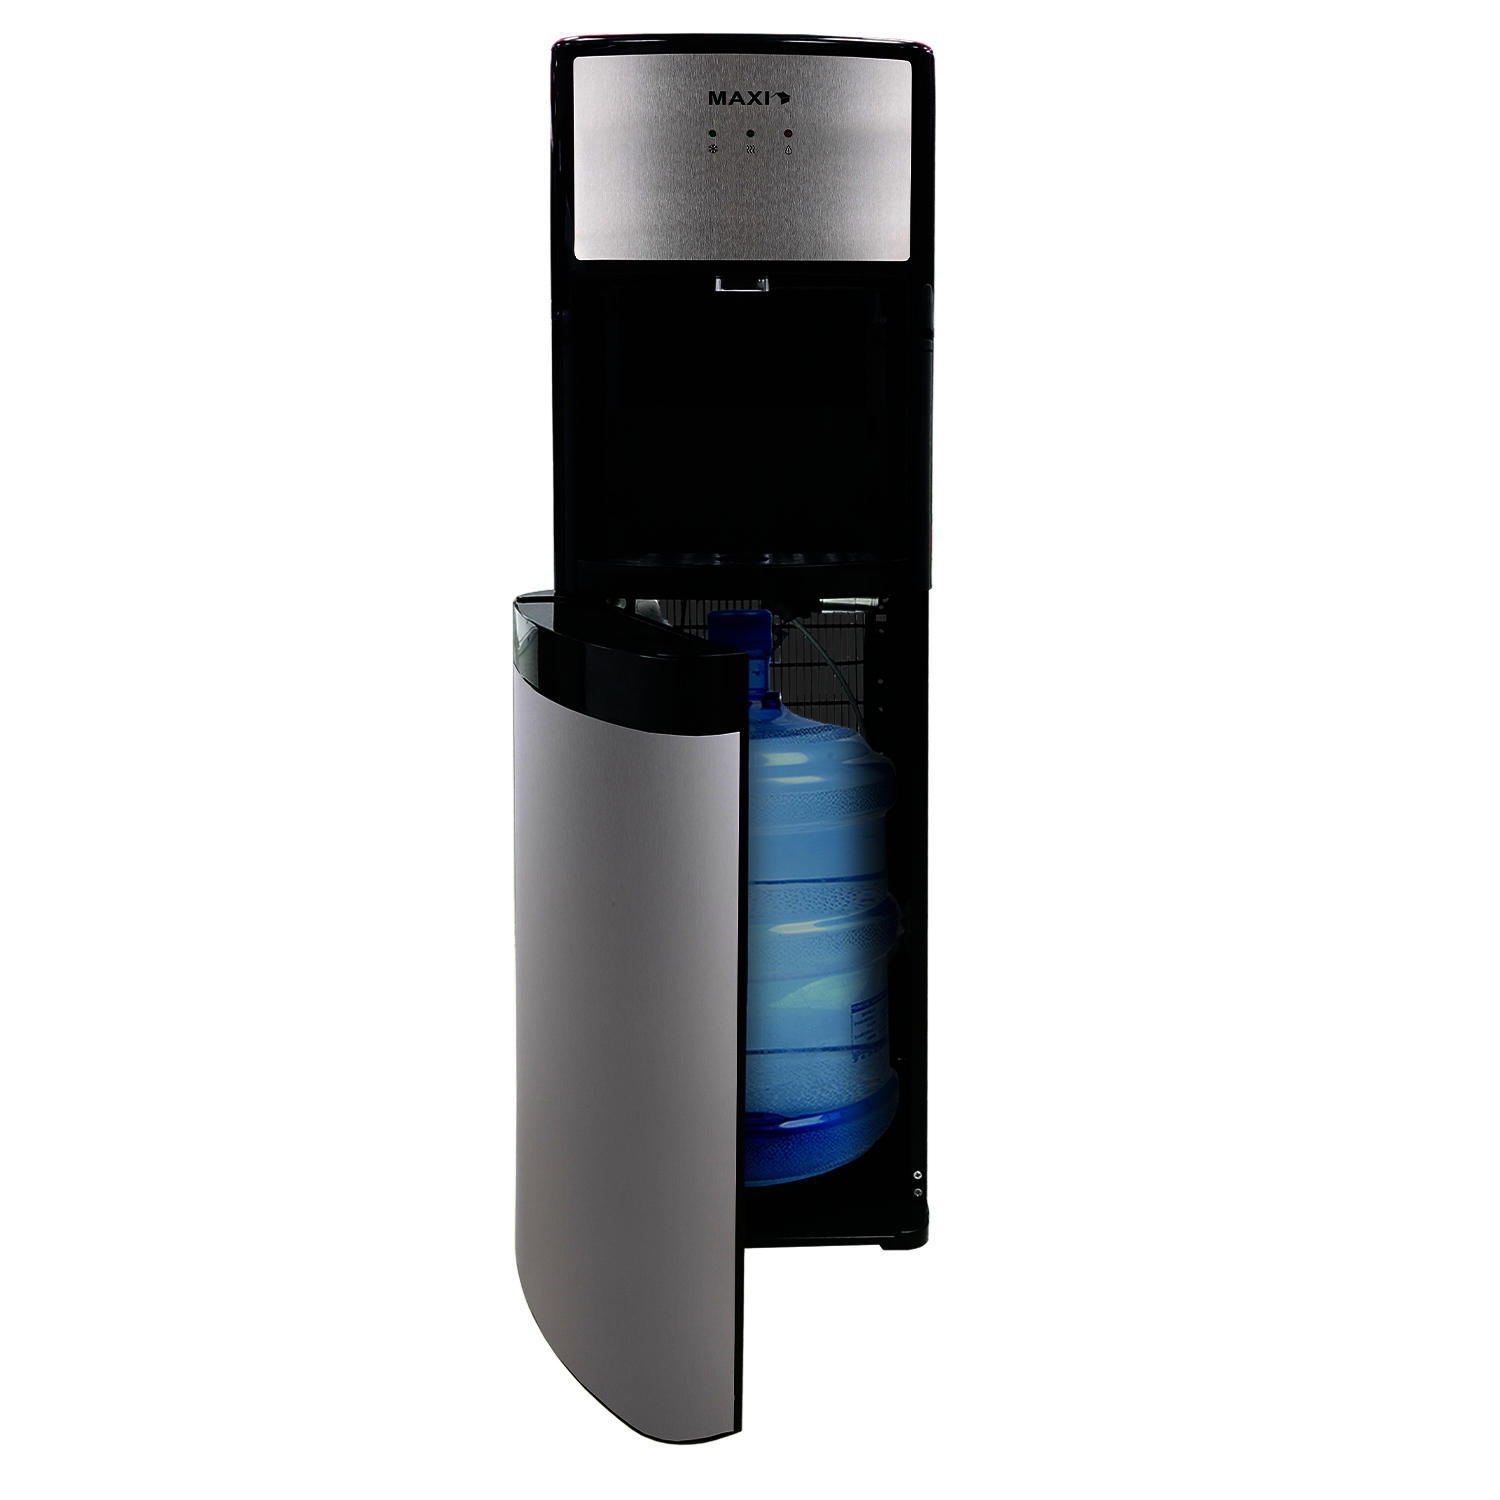 Maxi 1639S Water Dispenser